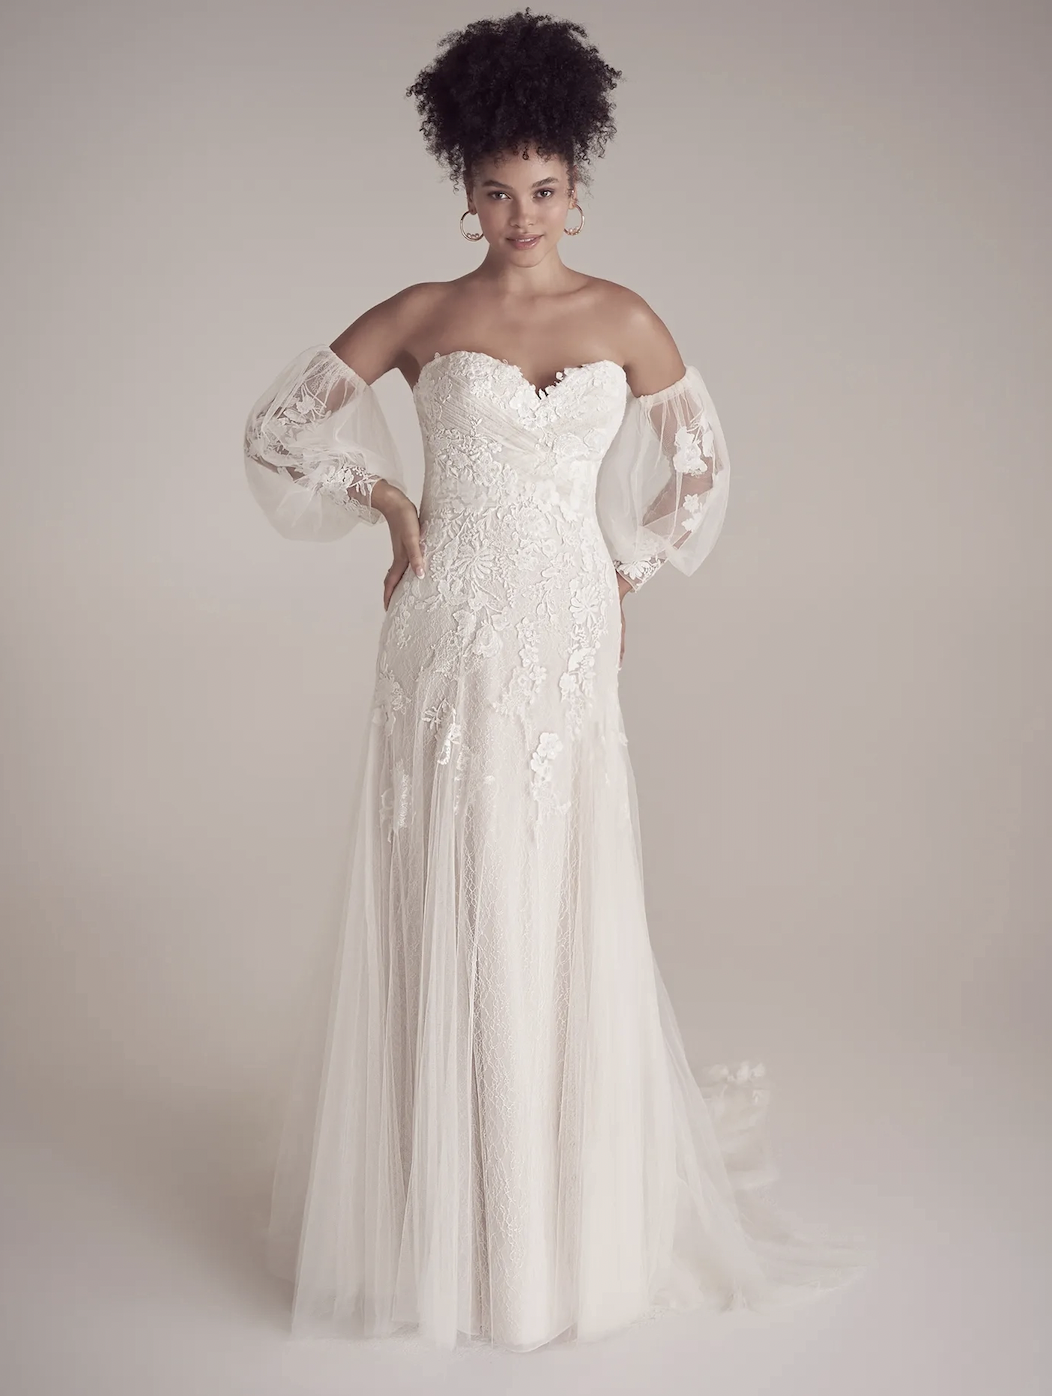 Model wearing Ellington wedding dress by Sottero & Midgley